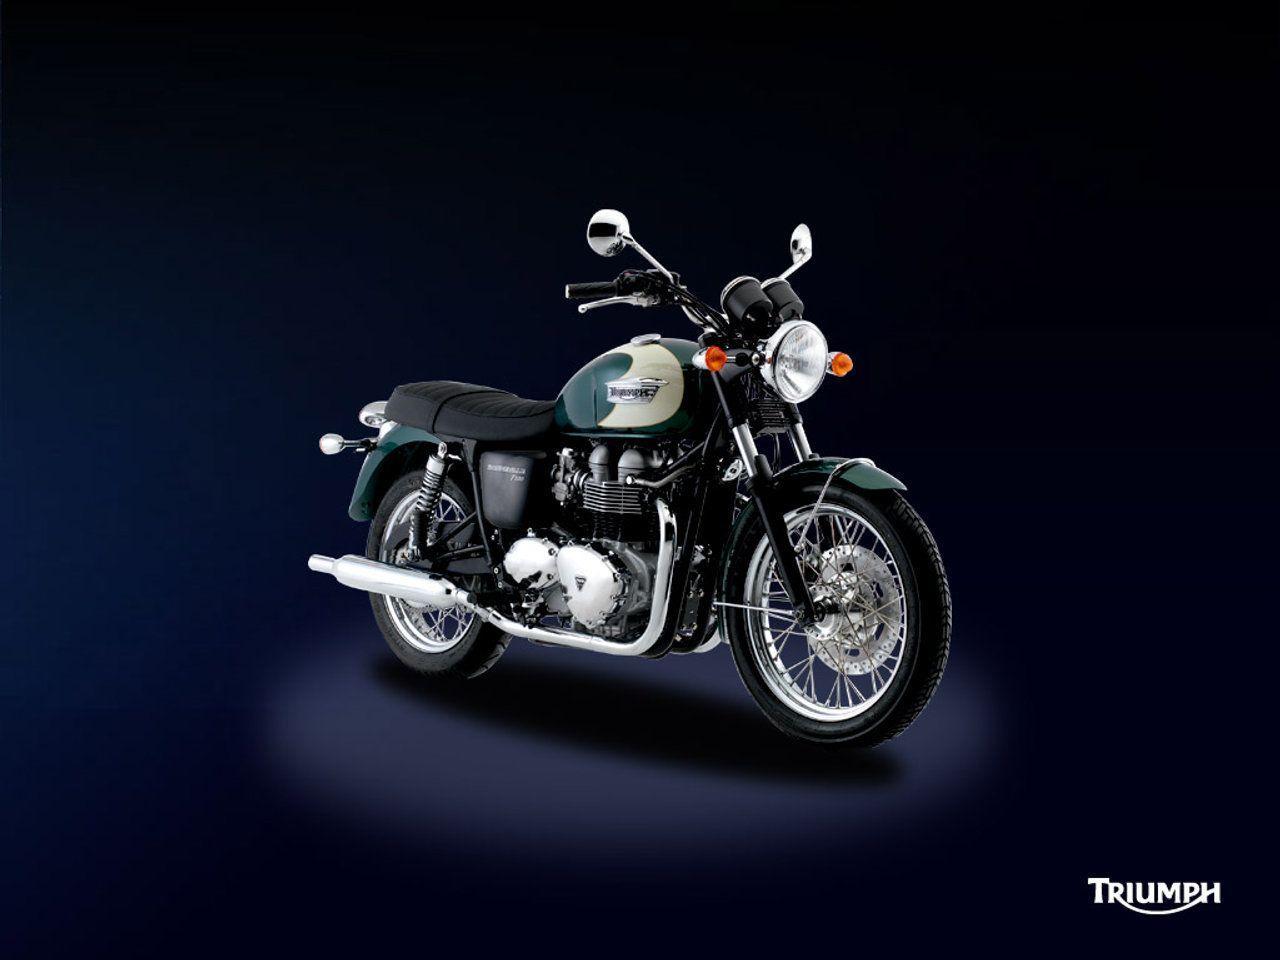 Triumph Bonneville T100 Wallpaper. Motorcycles Wallpaper Gallery